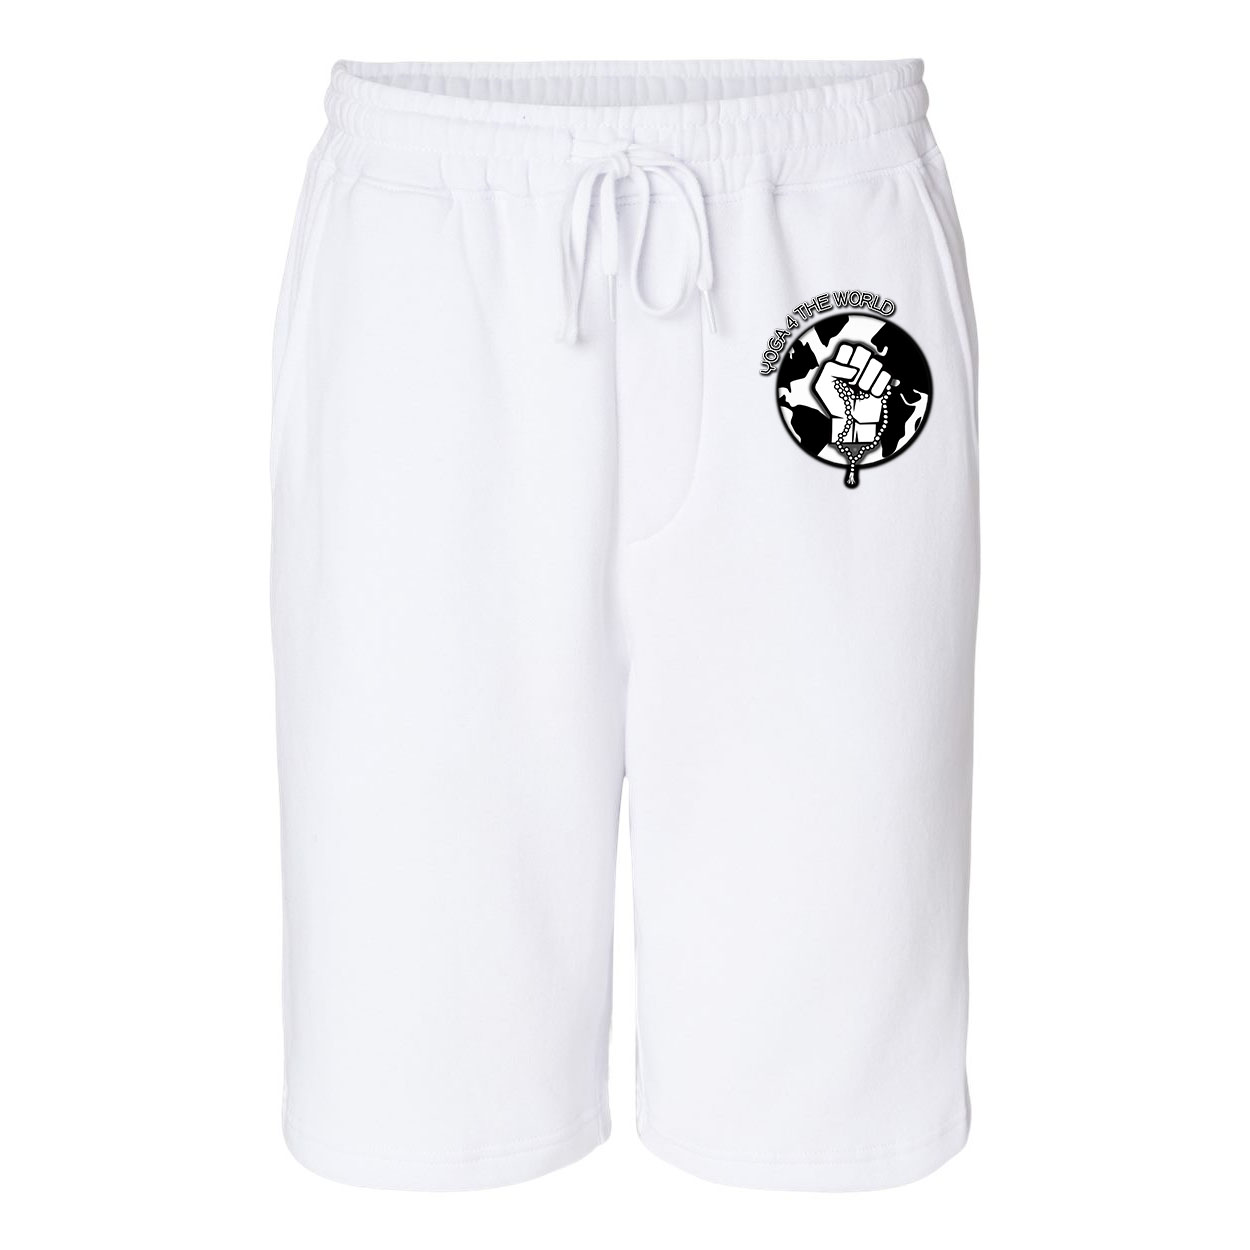 Yoga4TheWorld White Fleece Shorts